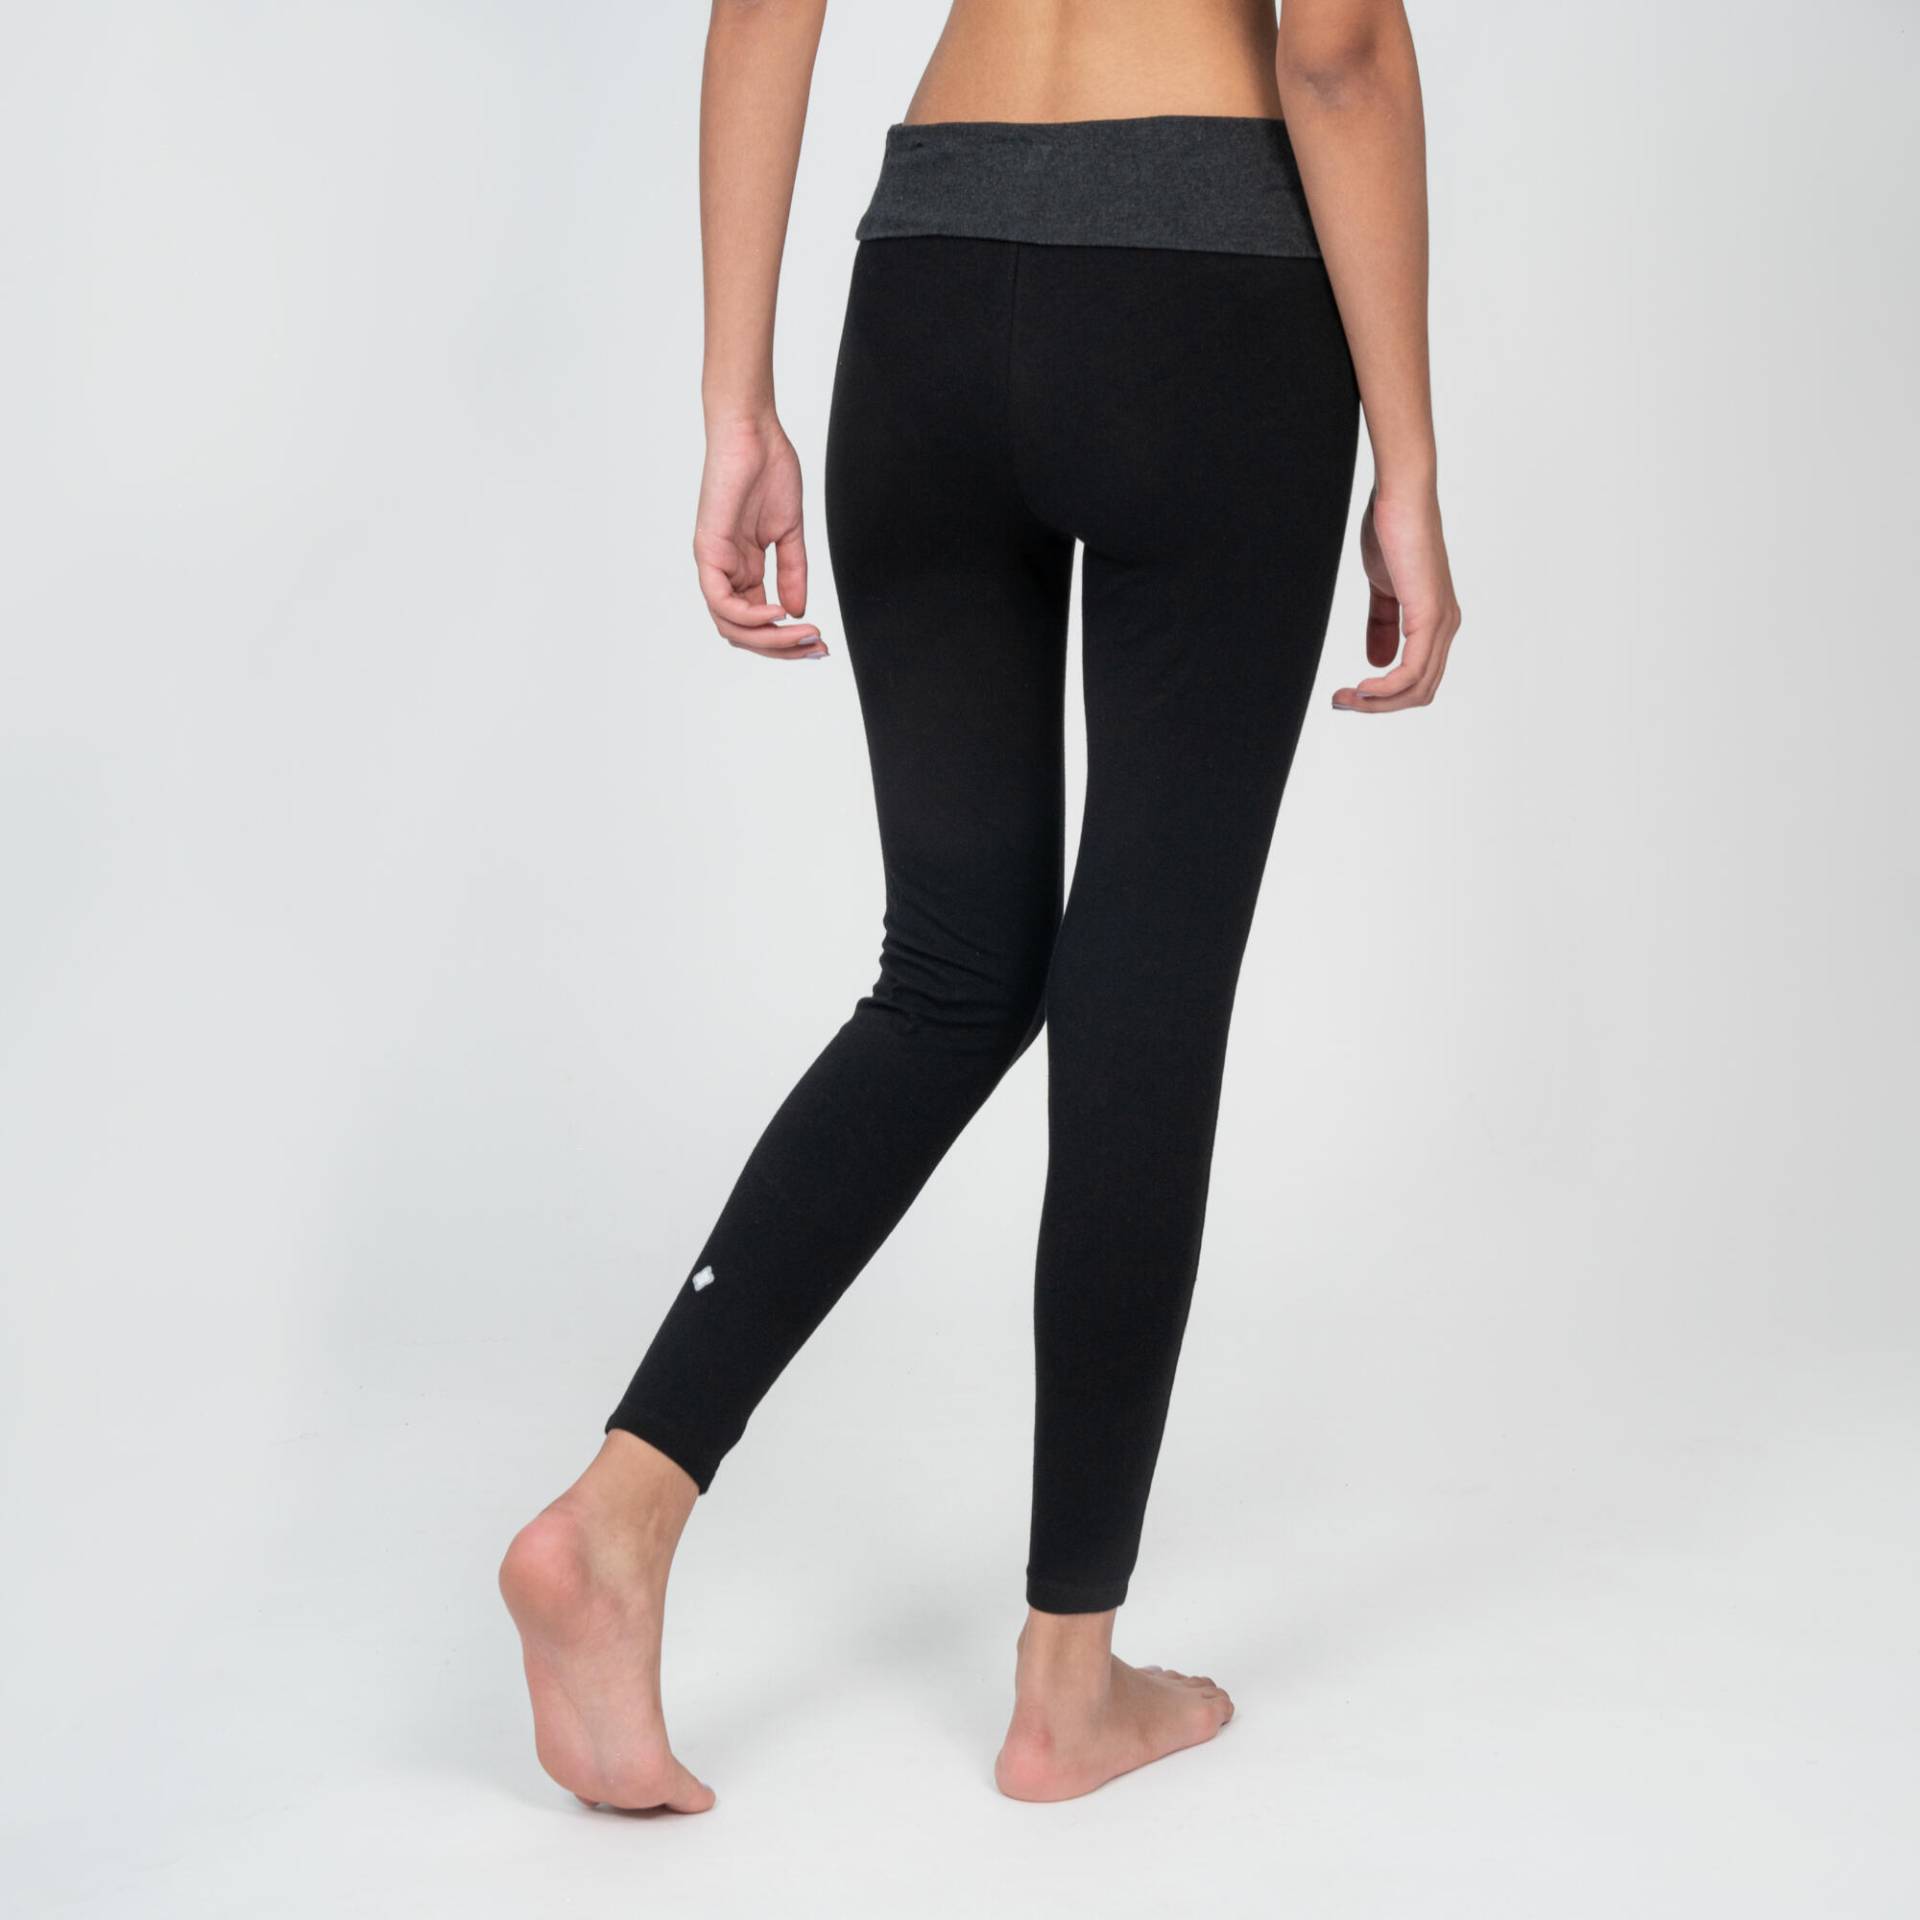 Leggings Yoga Damen Baumwolle - schwarz/grau von KIMJALY